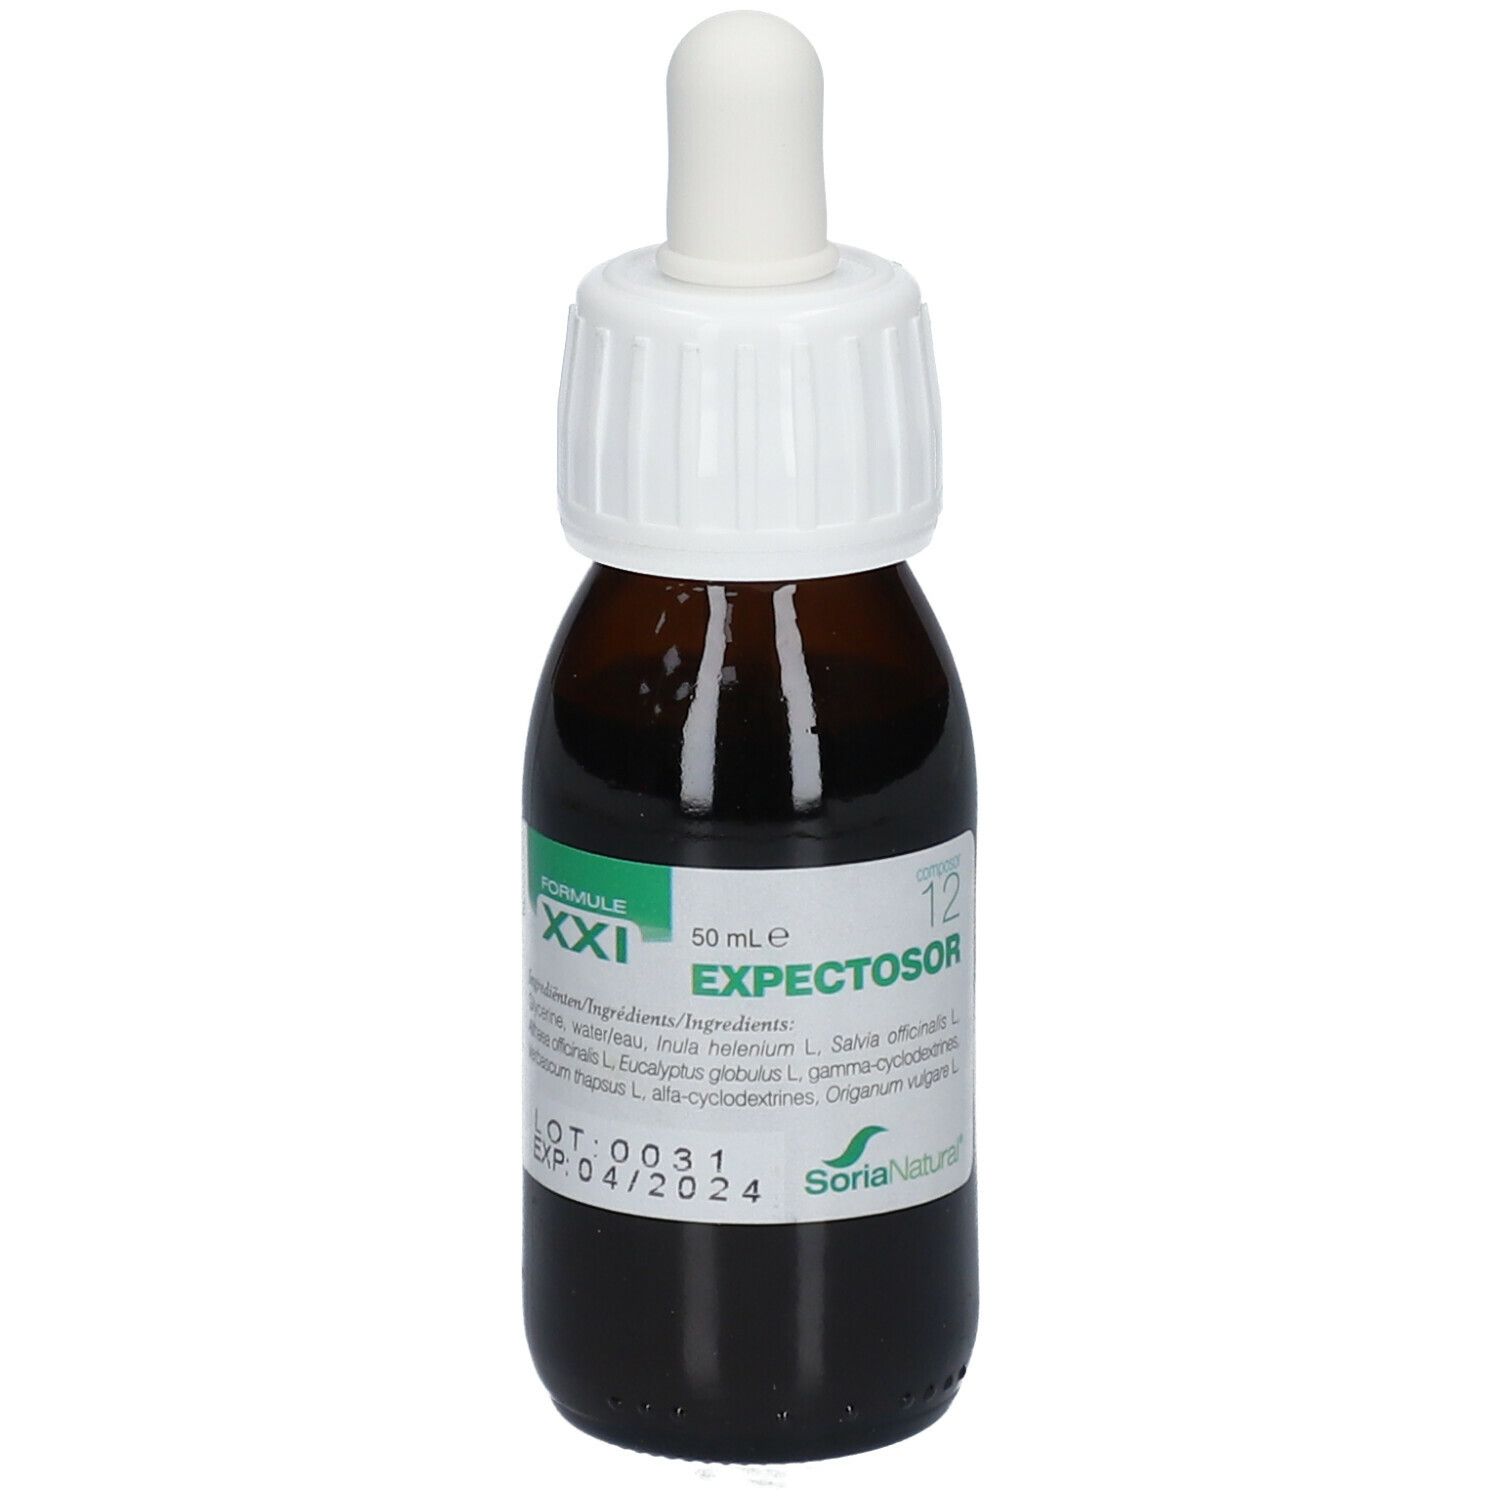 Soria Natural® Expectosor XXI C-12 Eucalyptus Complex